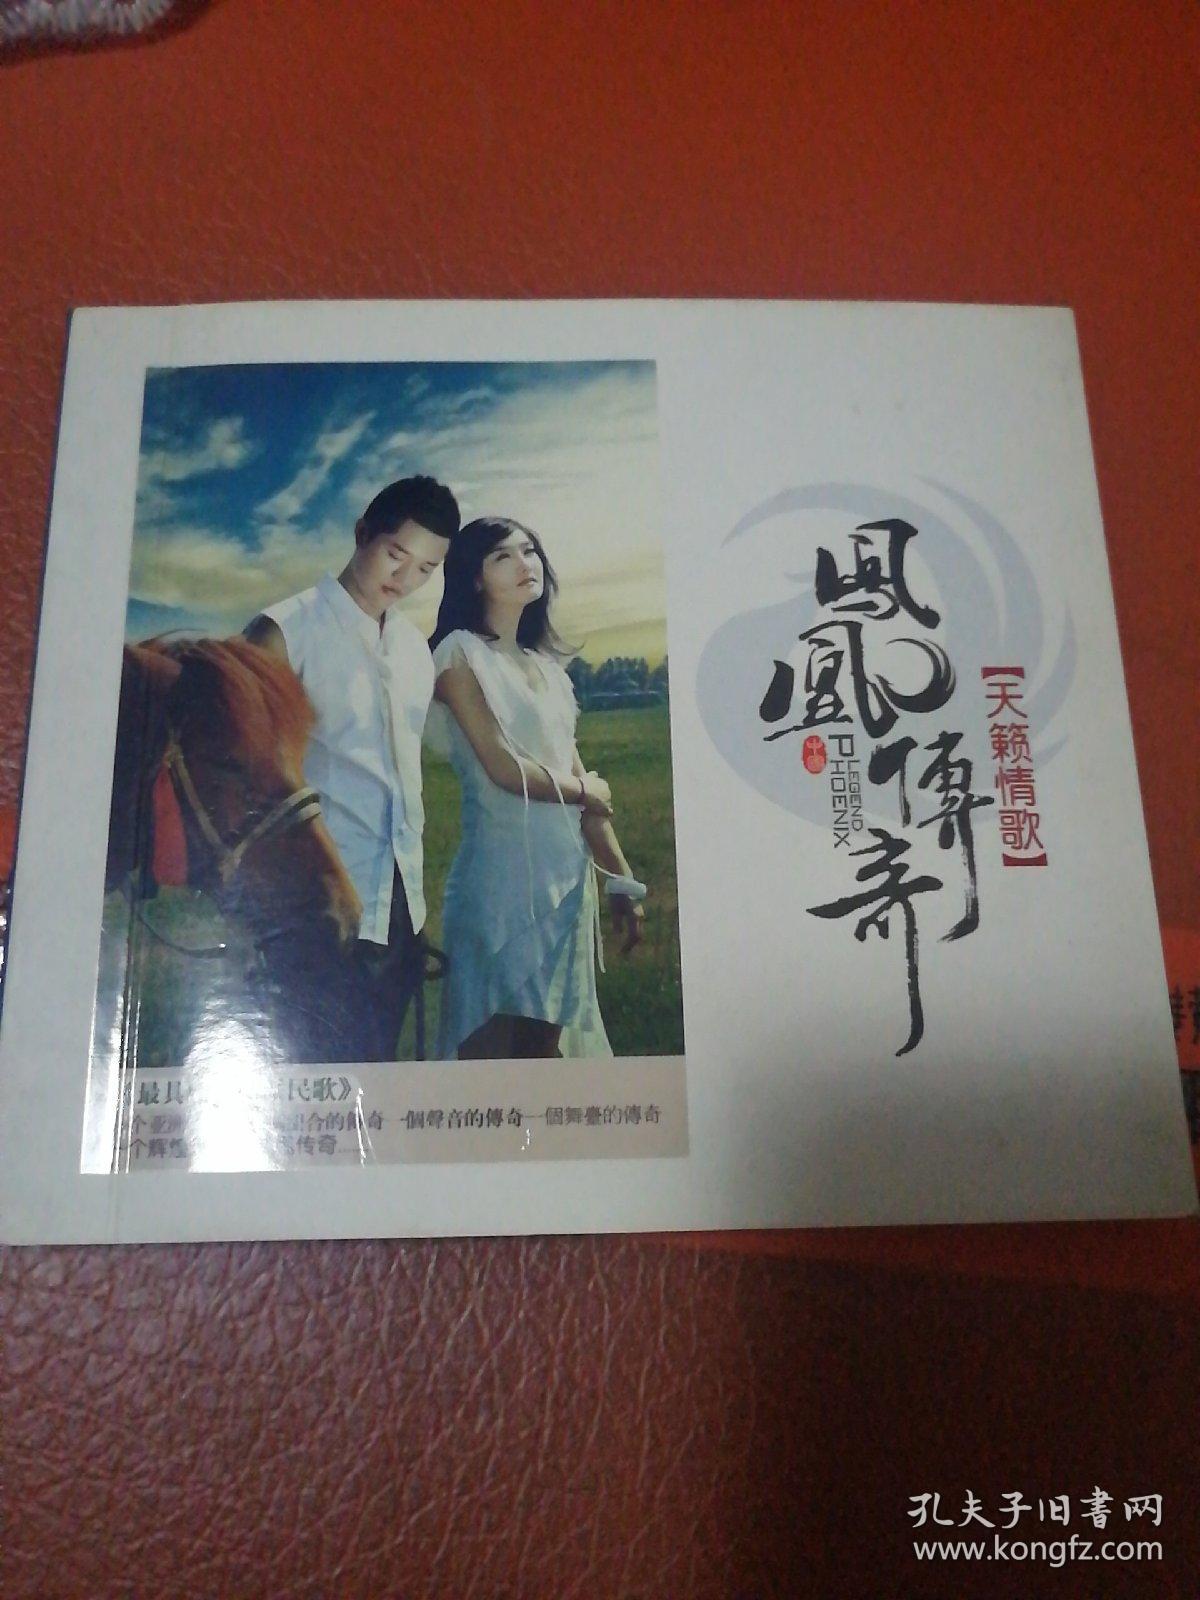 CD光盘2张-凤凰传奇 :天籁传奇